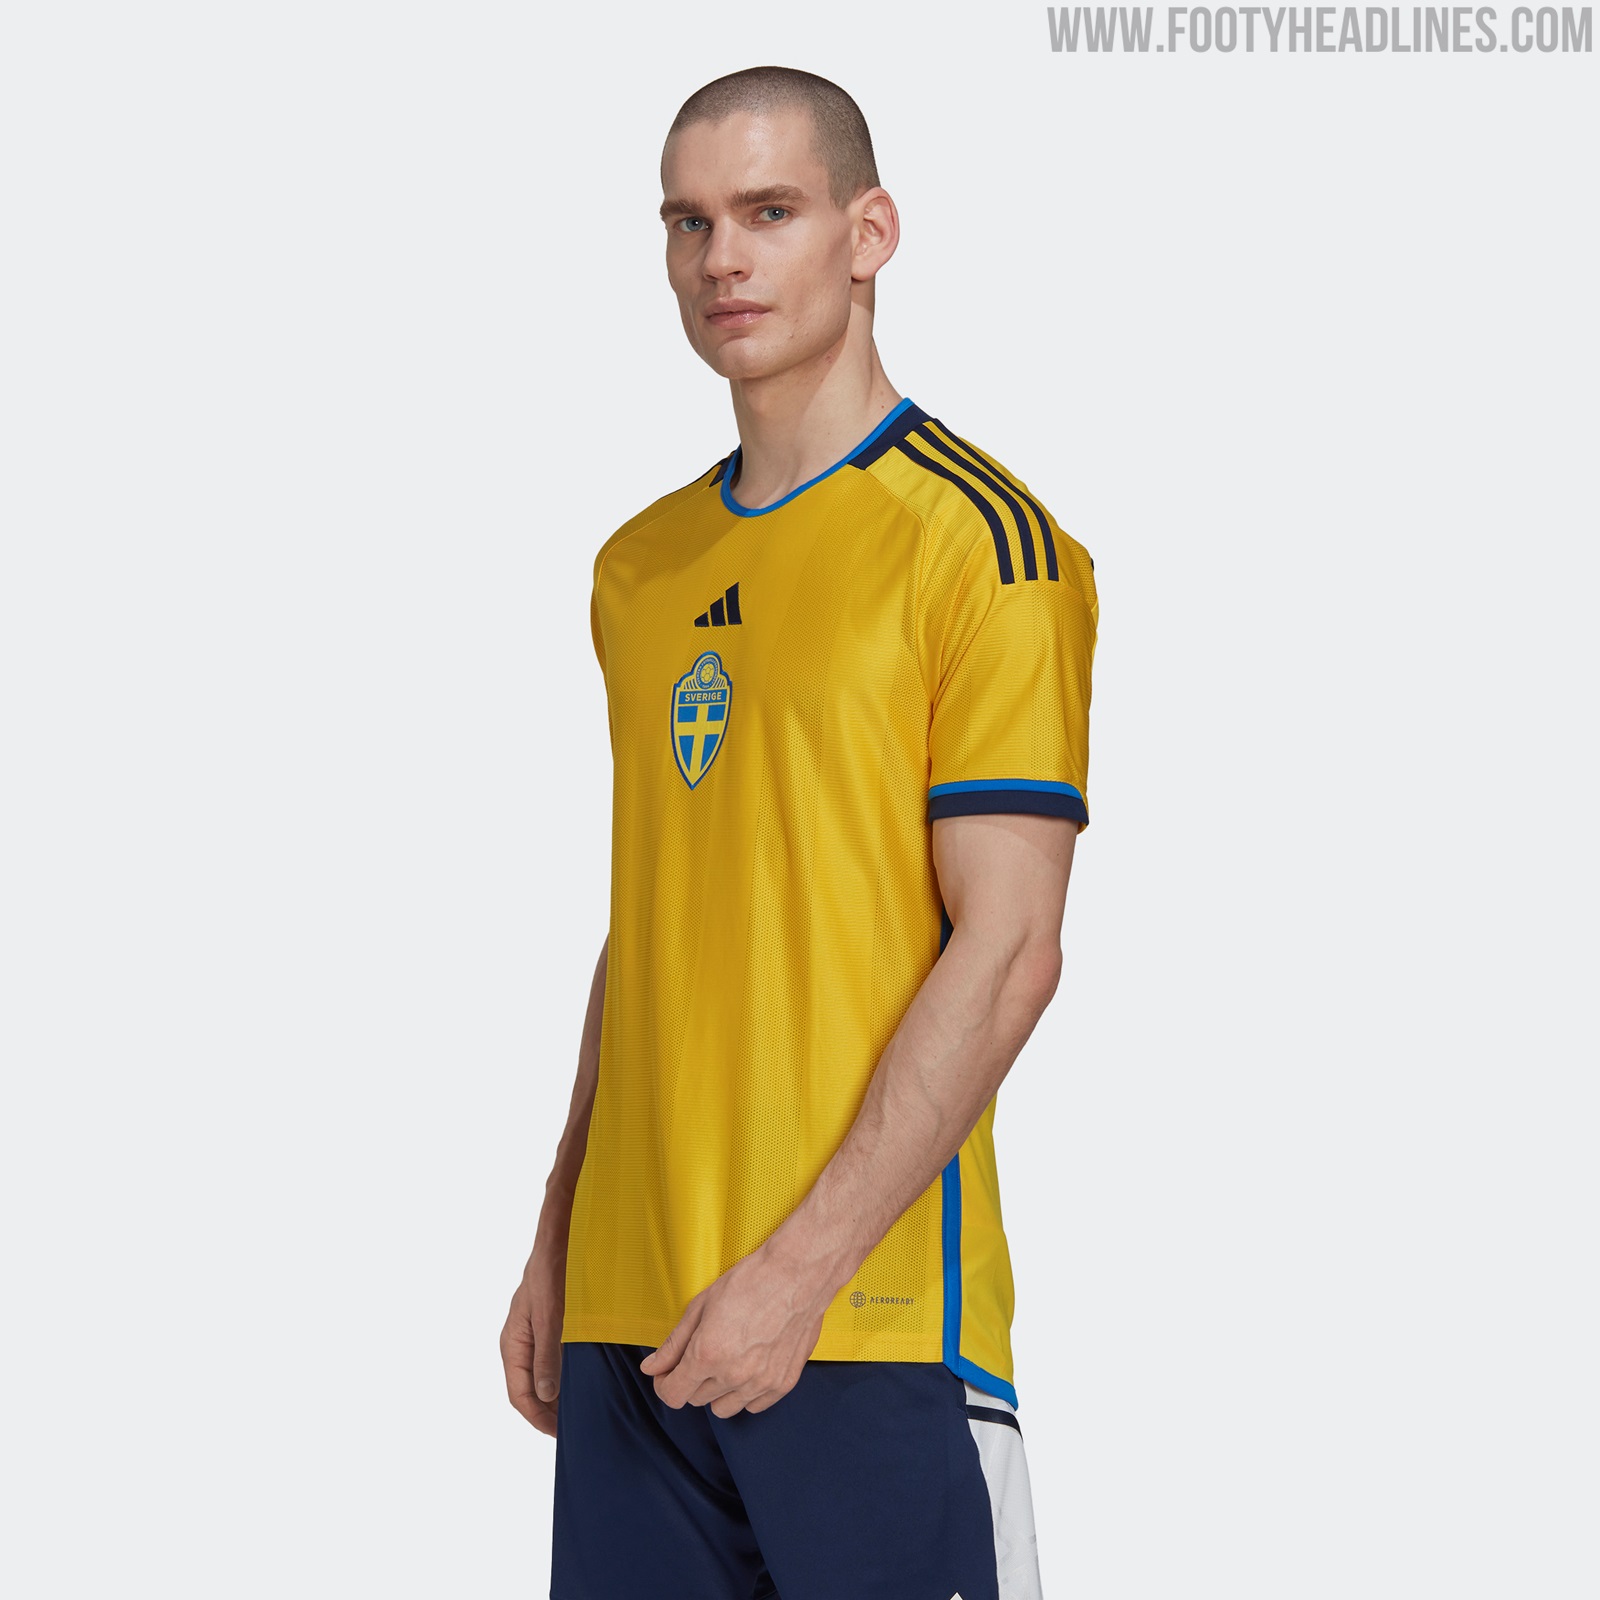 Sweden 2022 Home & Away Kits Released - Footy Headlines